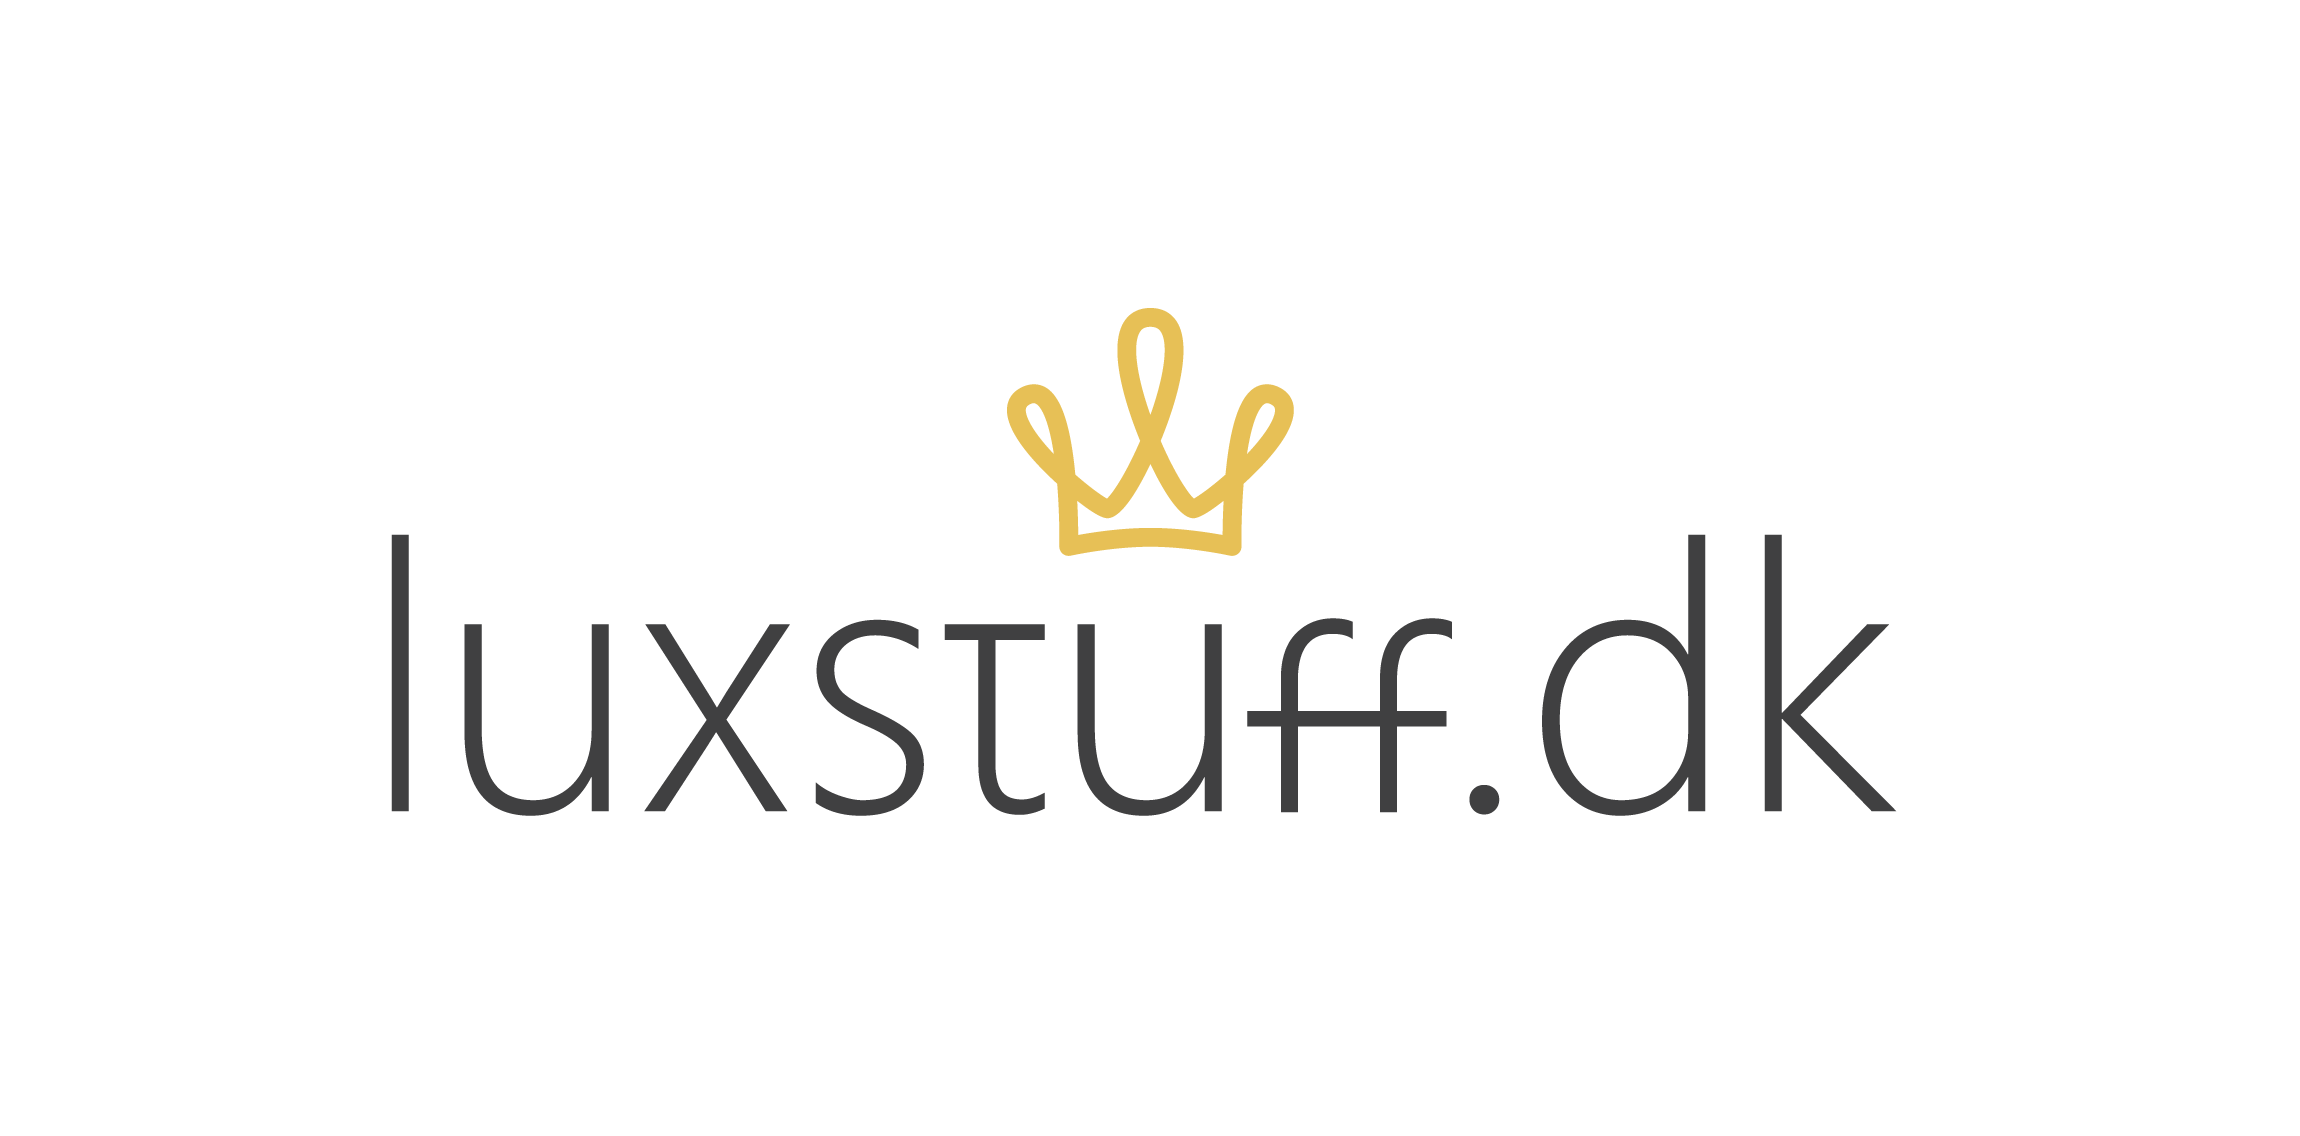 Luxstuff.dk